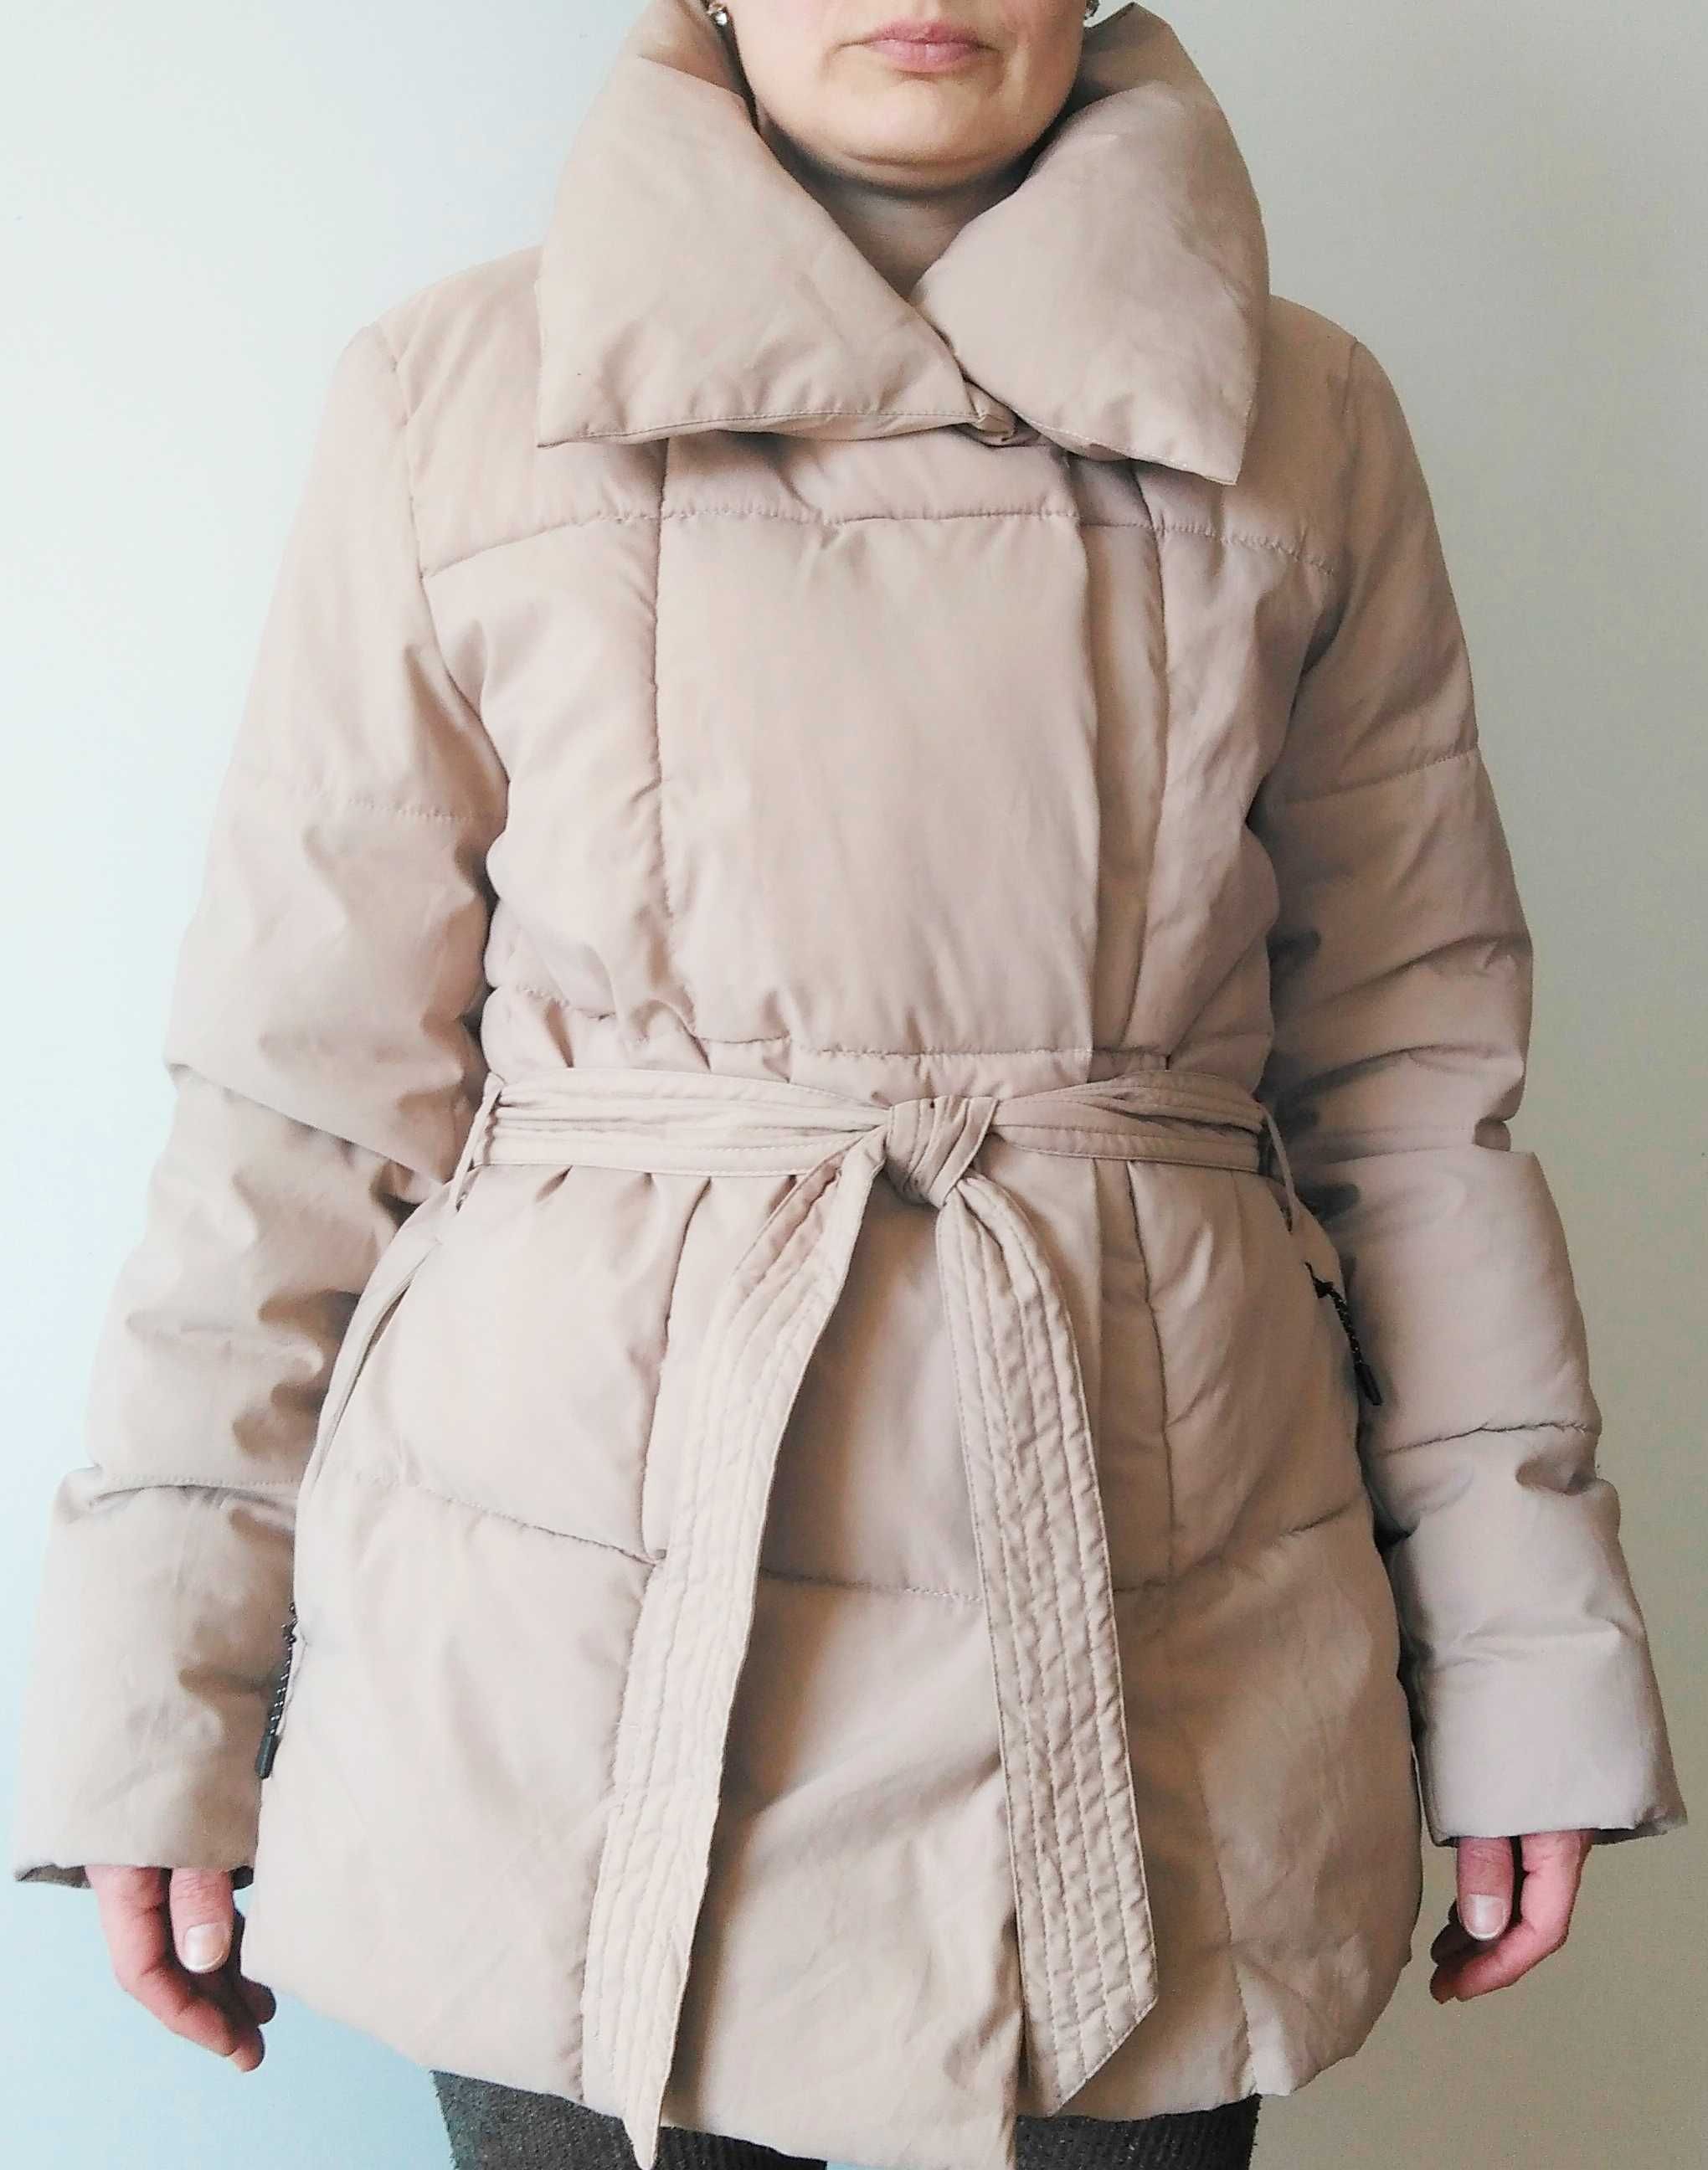 Куртка / пуховик зимняя, размером XL/50, на кнопках, произв. Германии